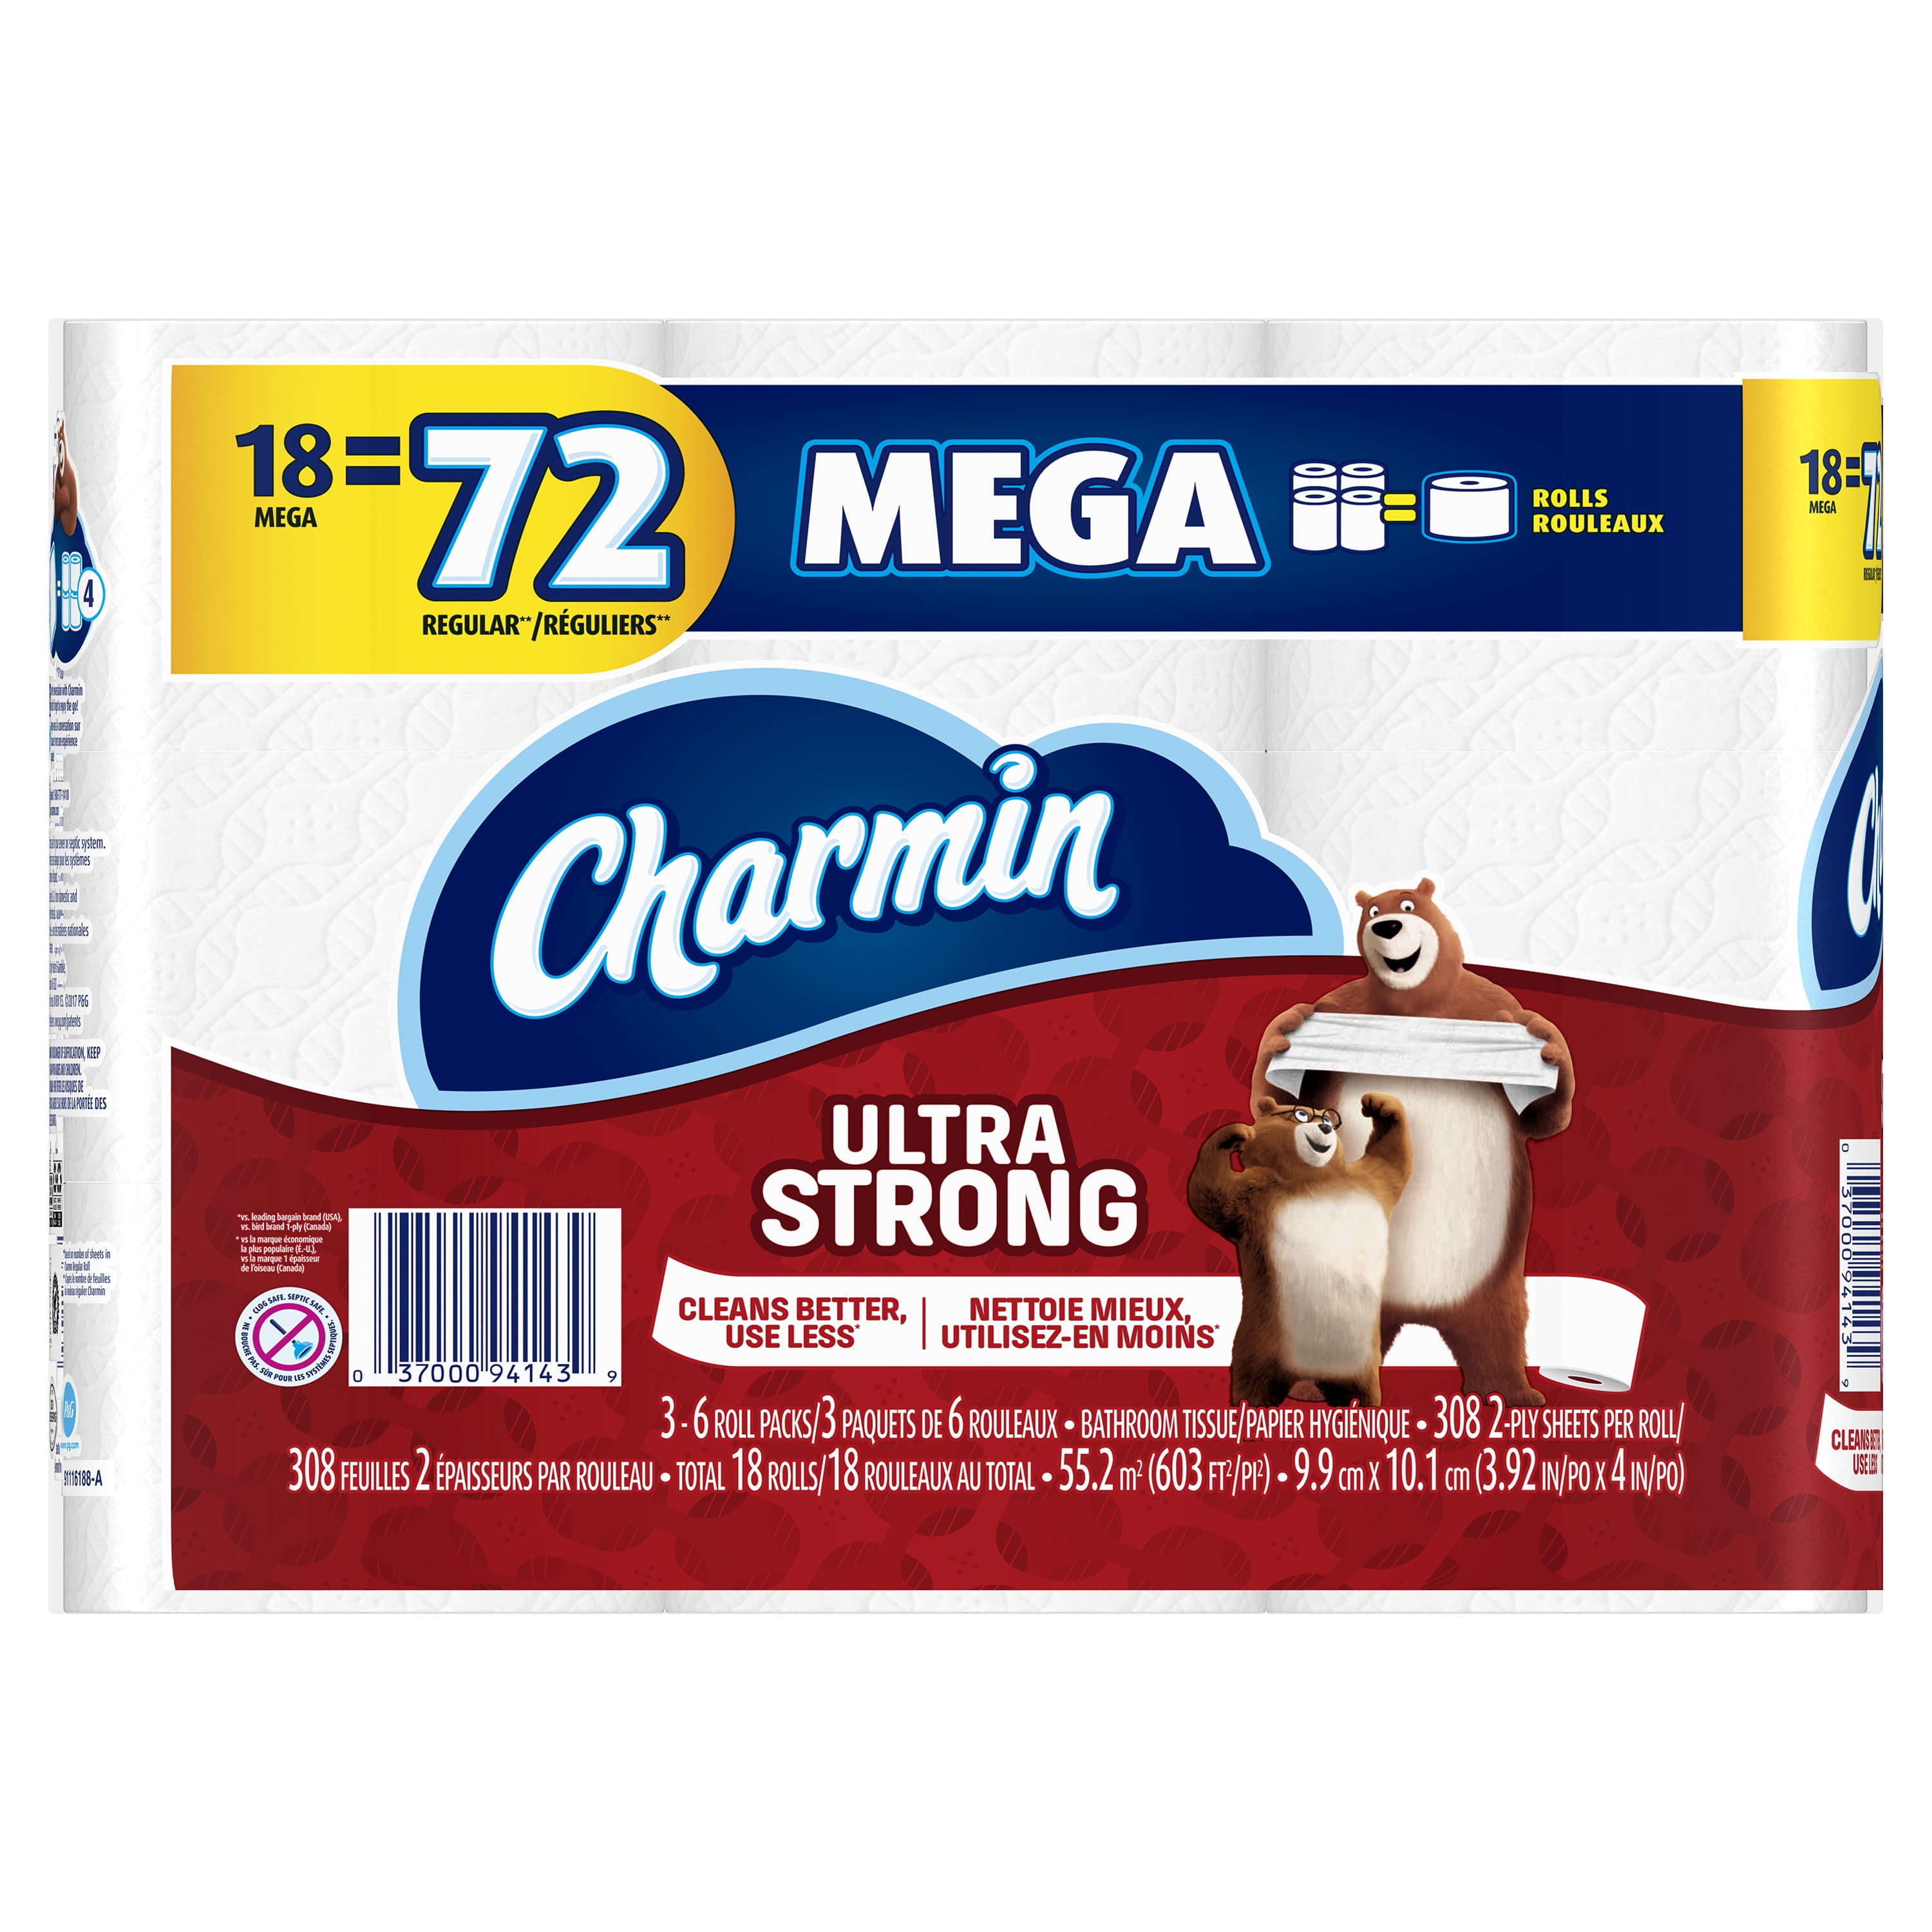 Charmin Ultra Strong Toilet Paper 18 Mega Roll = 72 Regular Rolls. 